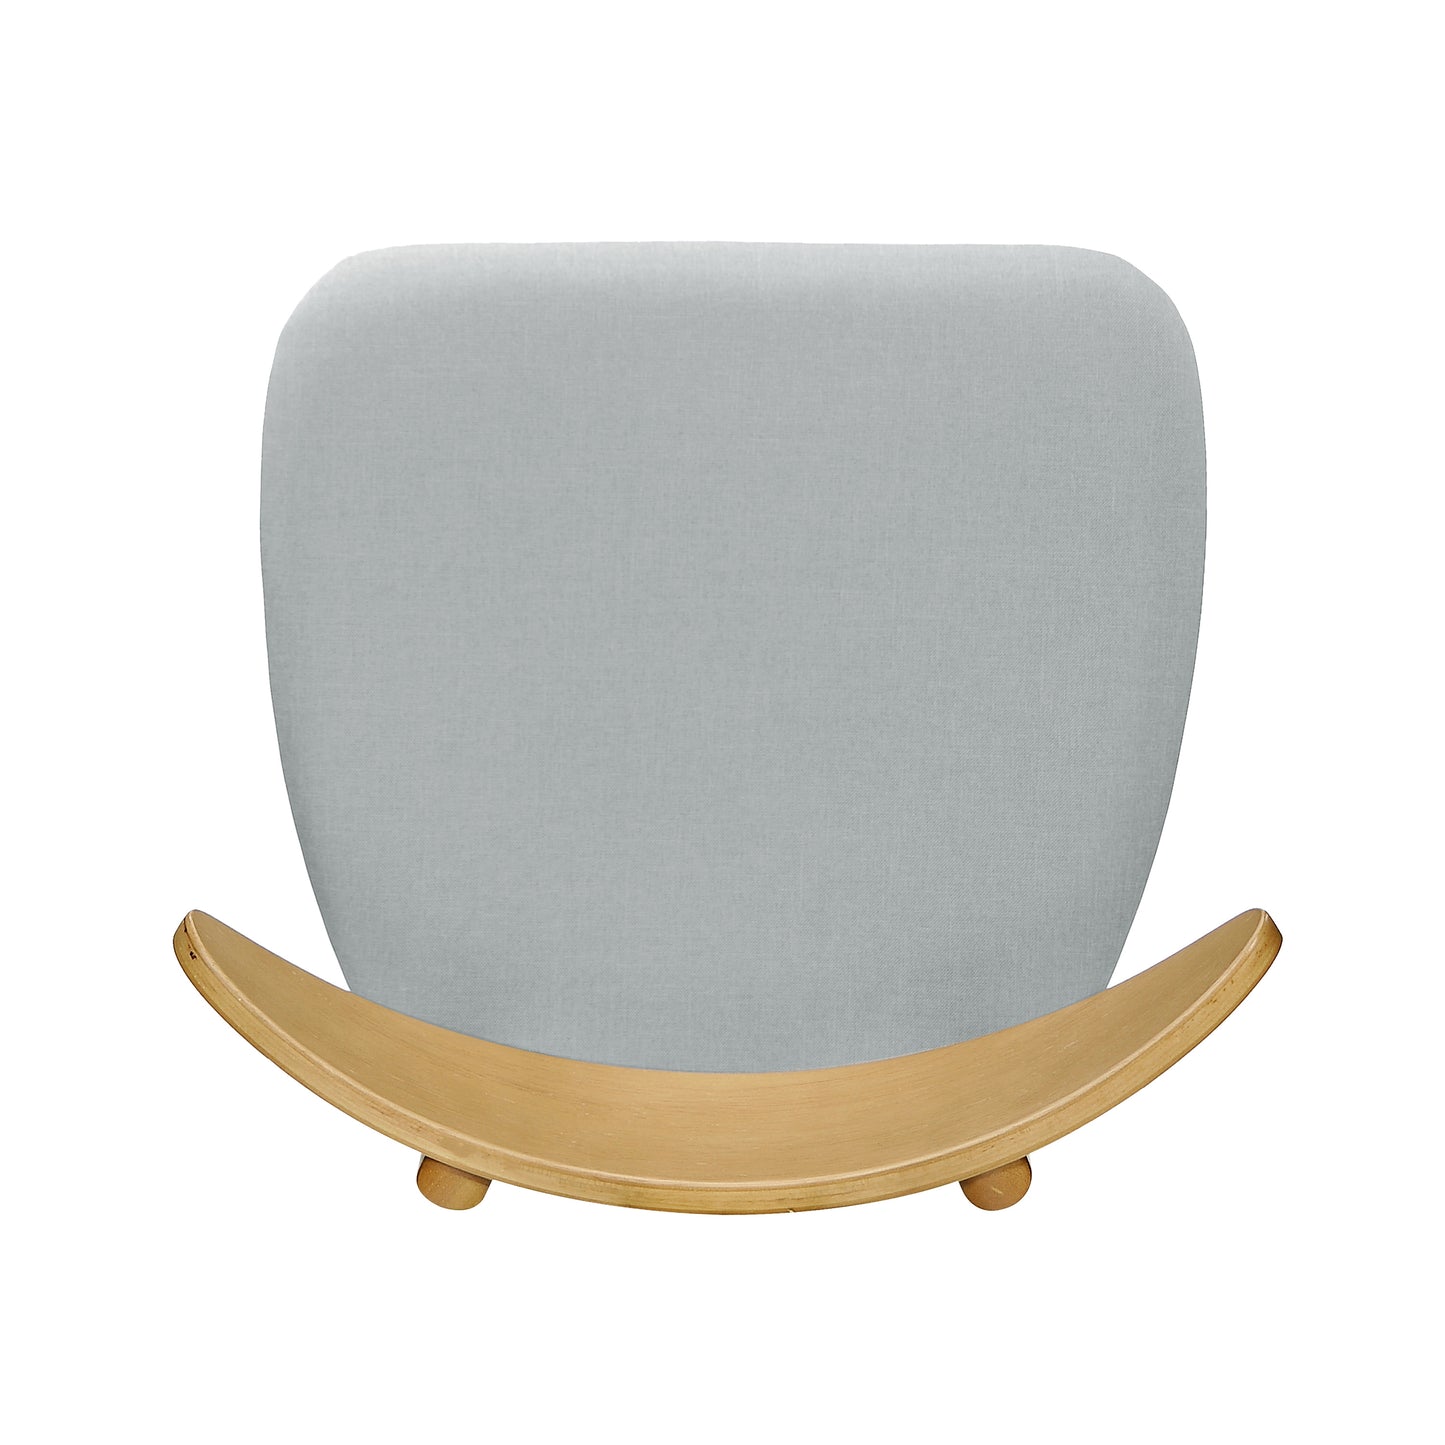 Issaic Mid-Century Modern Design Wood Dining Chairs (Set of 2)